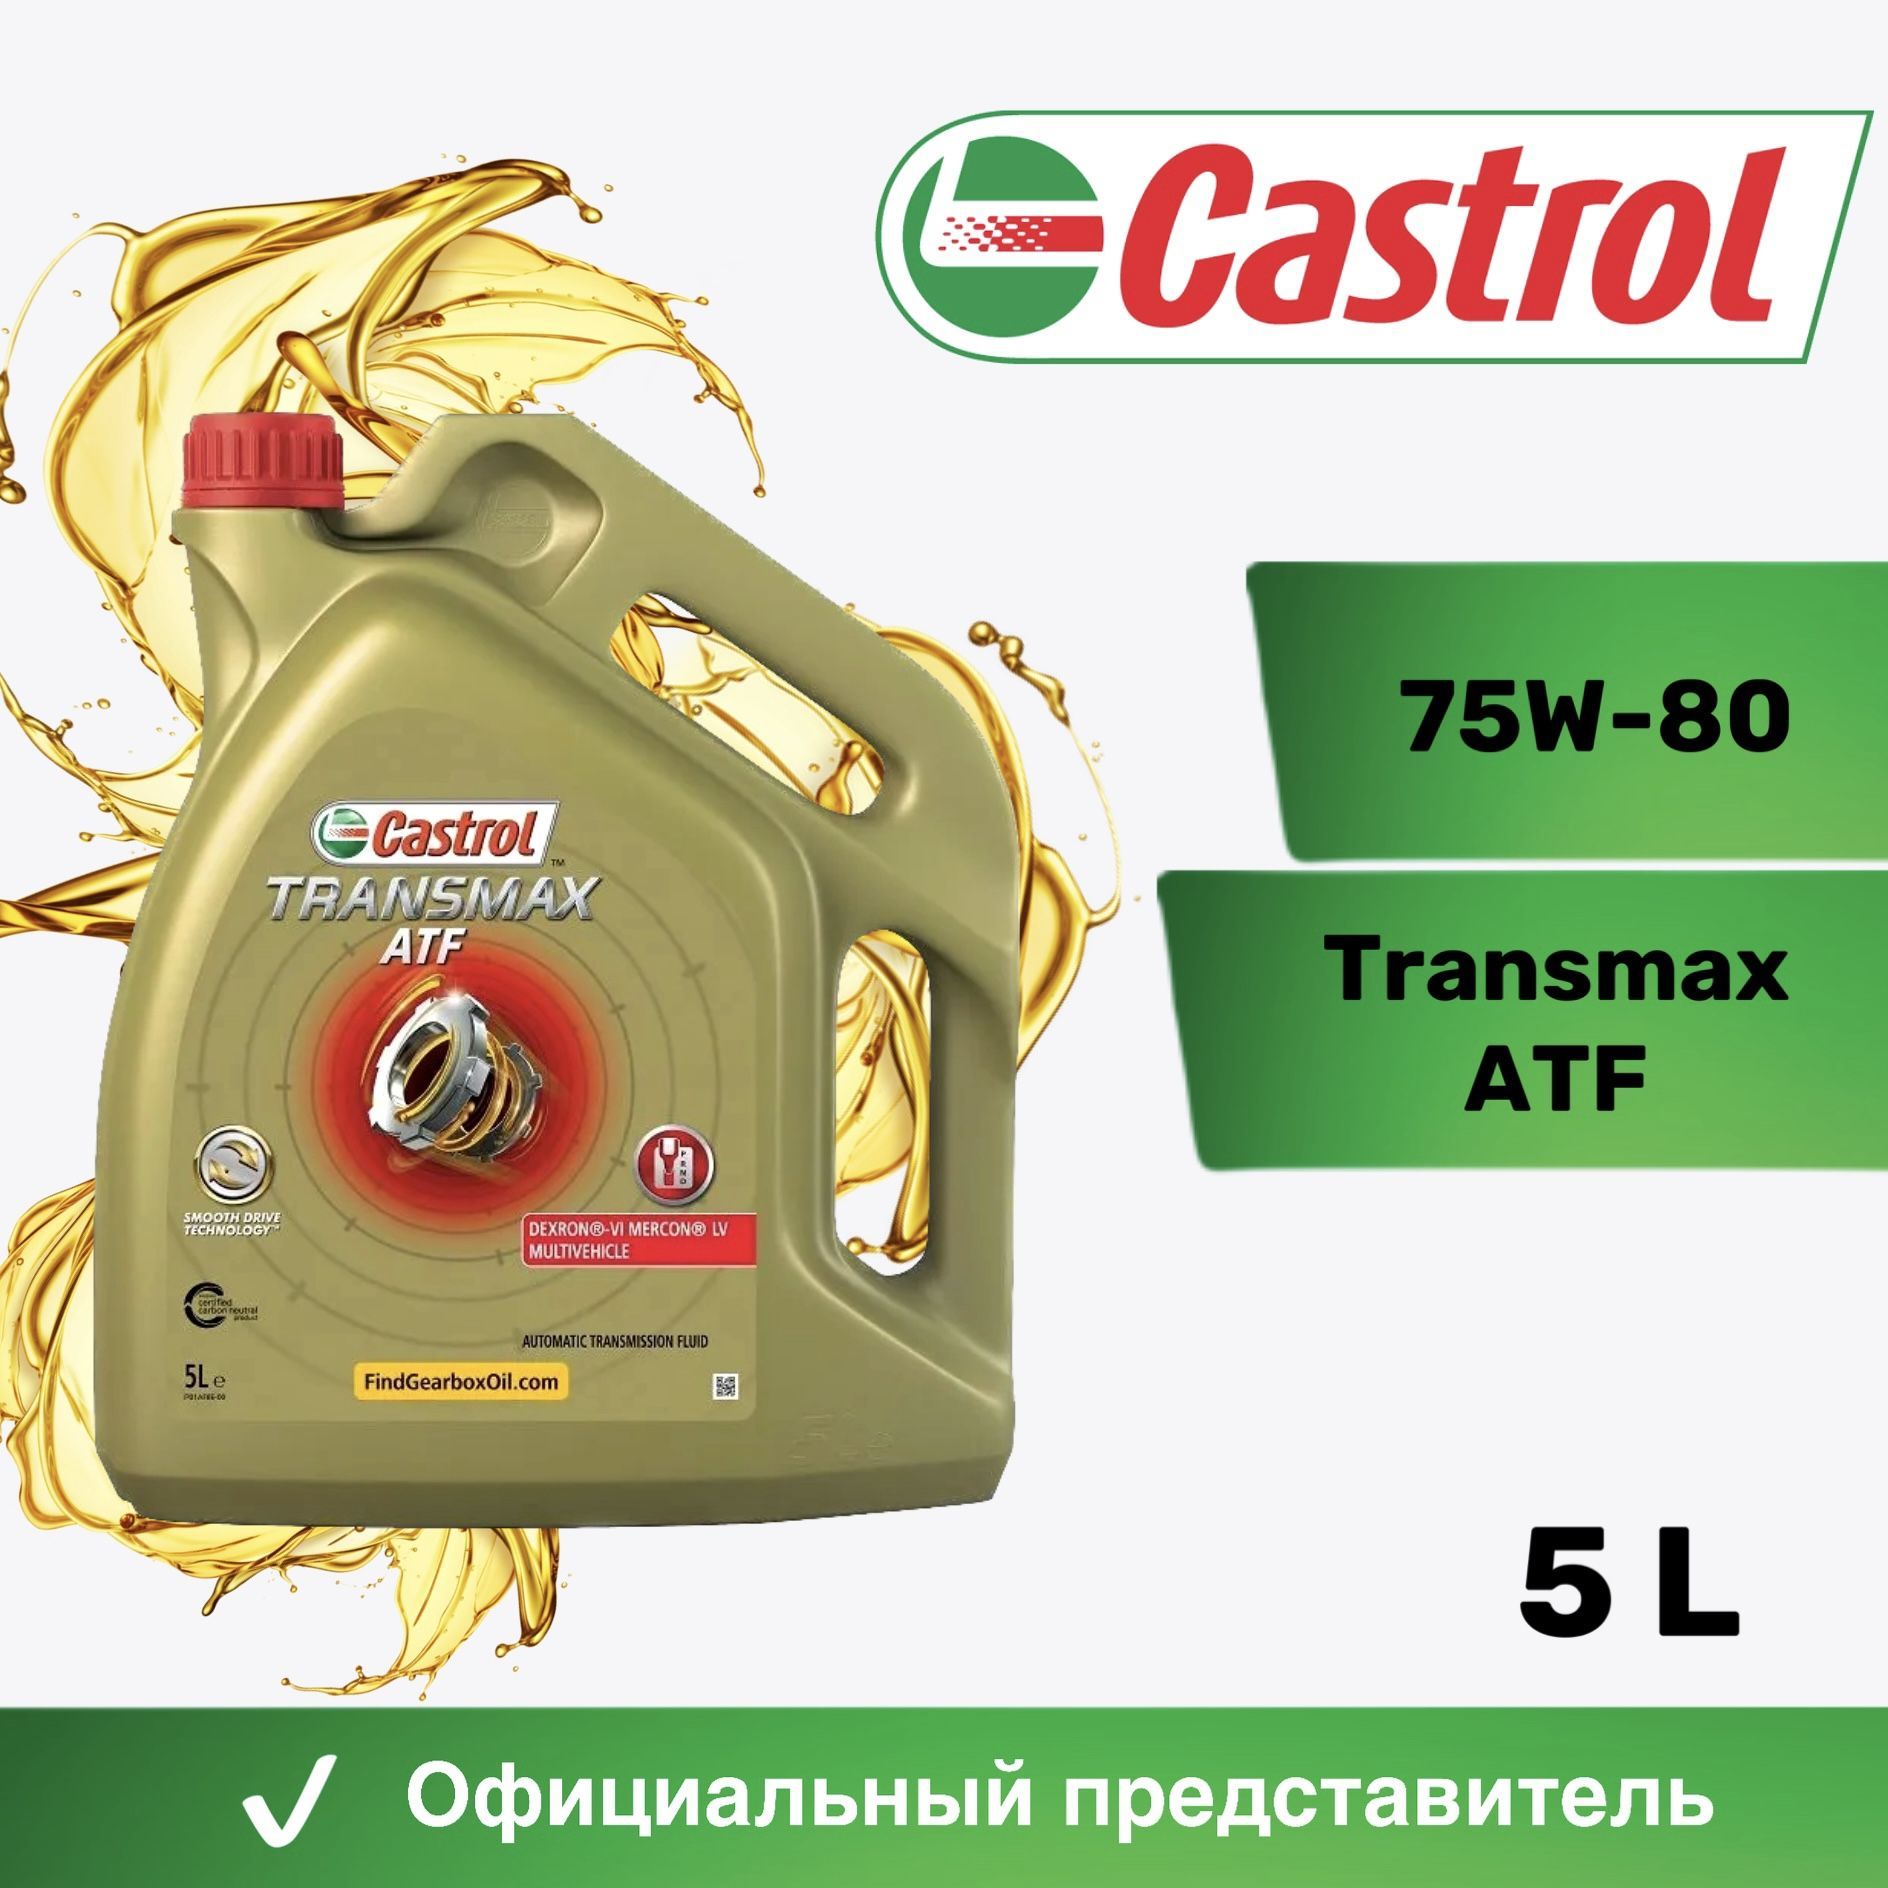 Castrol Transmax Universal 75w-90. Трансмиссионное масло Castrol Transmax z ATF. Castrol transmax atf